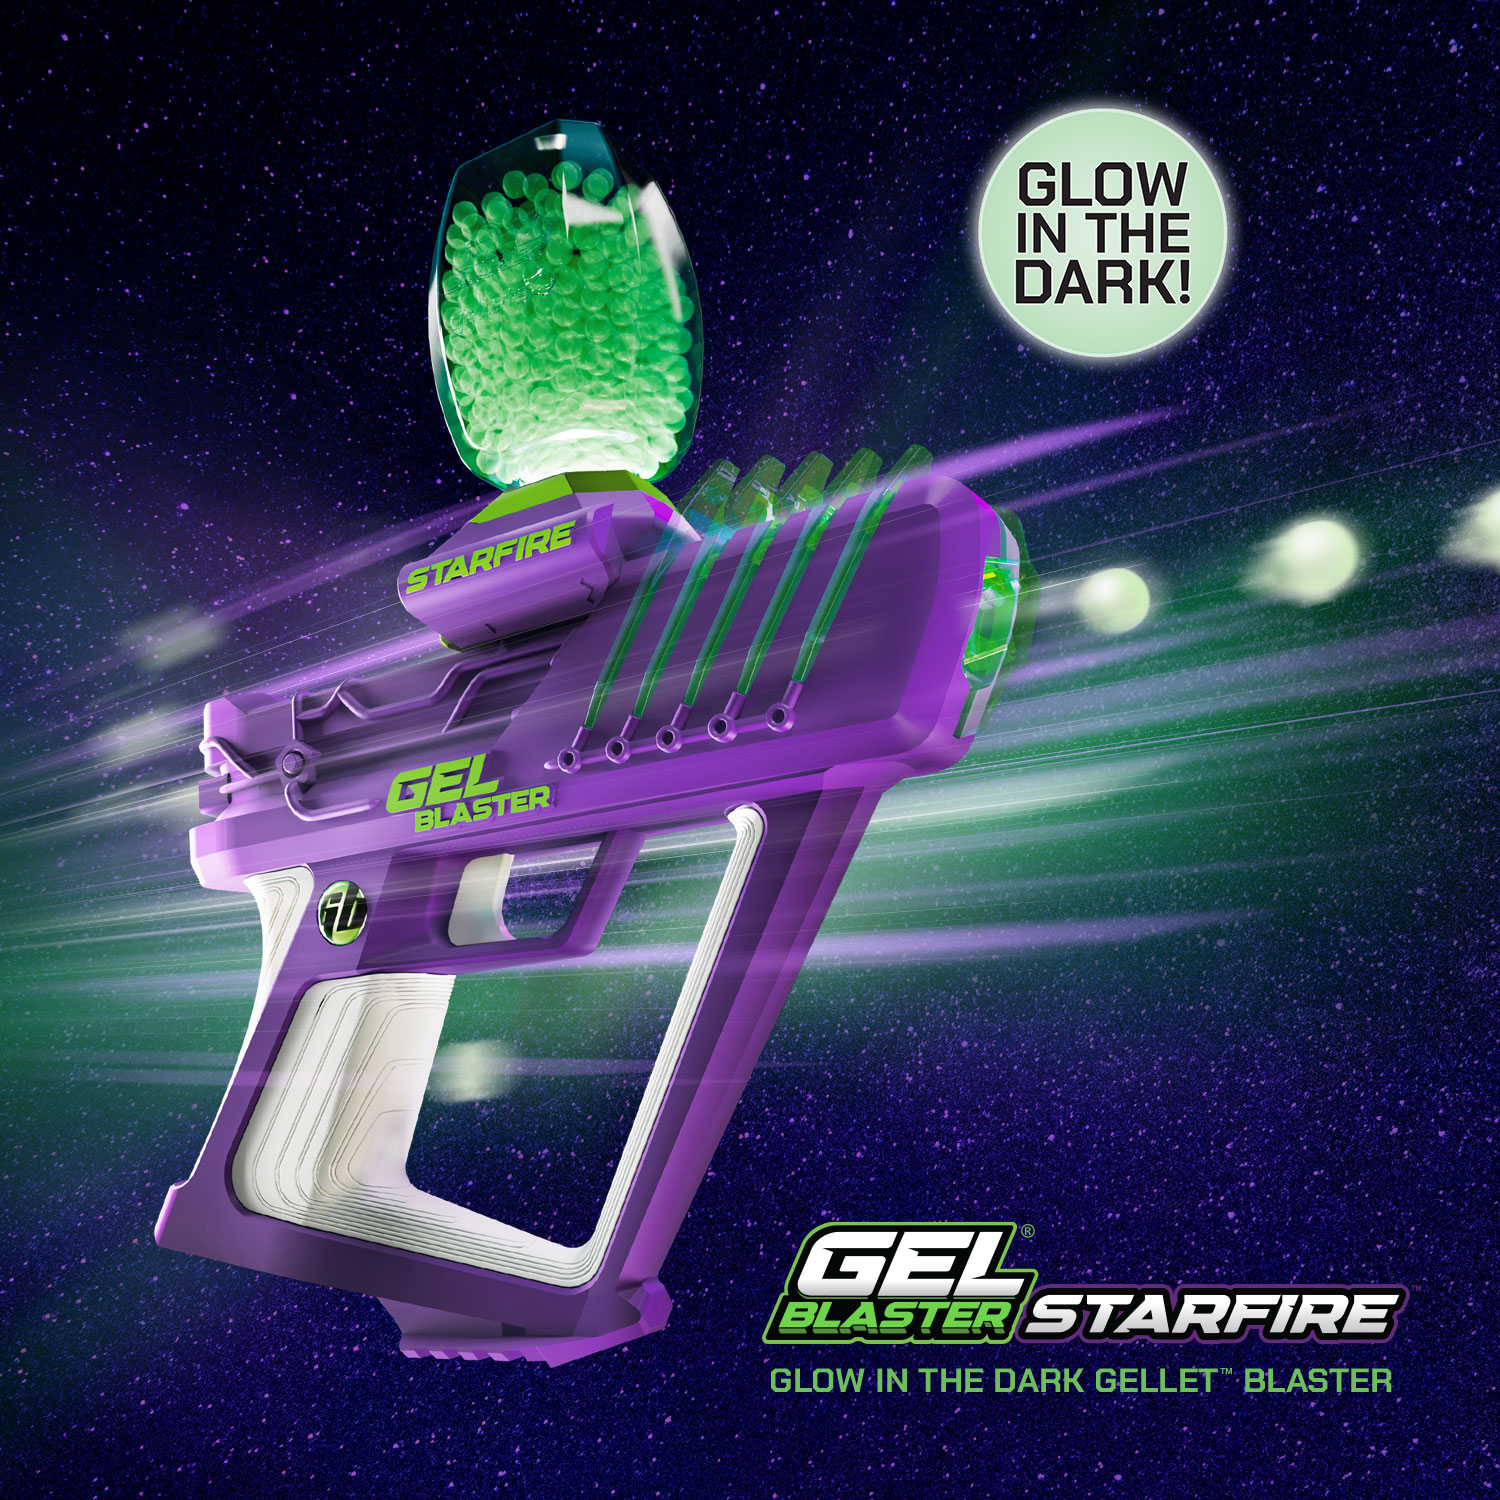 Gel Blaster Starfire, Glow-in-the-Dark Gellet Blaster, with 5,000 Starfire Glow-in-the-Dark Gellets - image 3 of 12